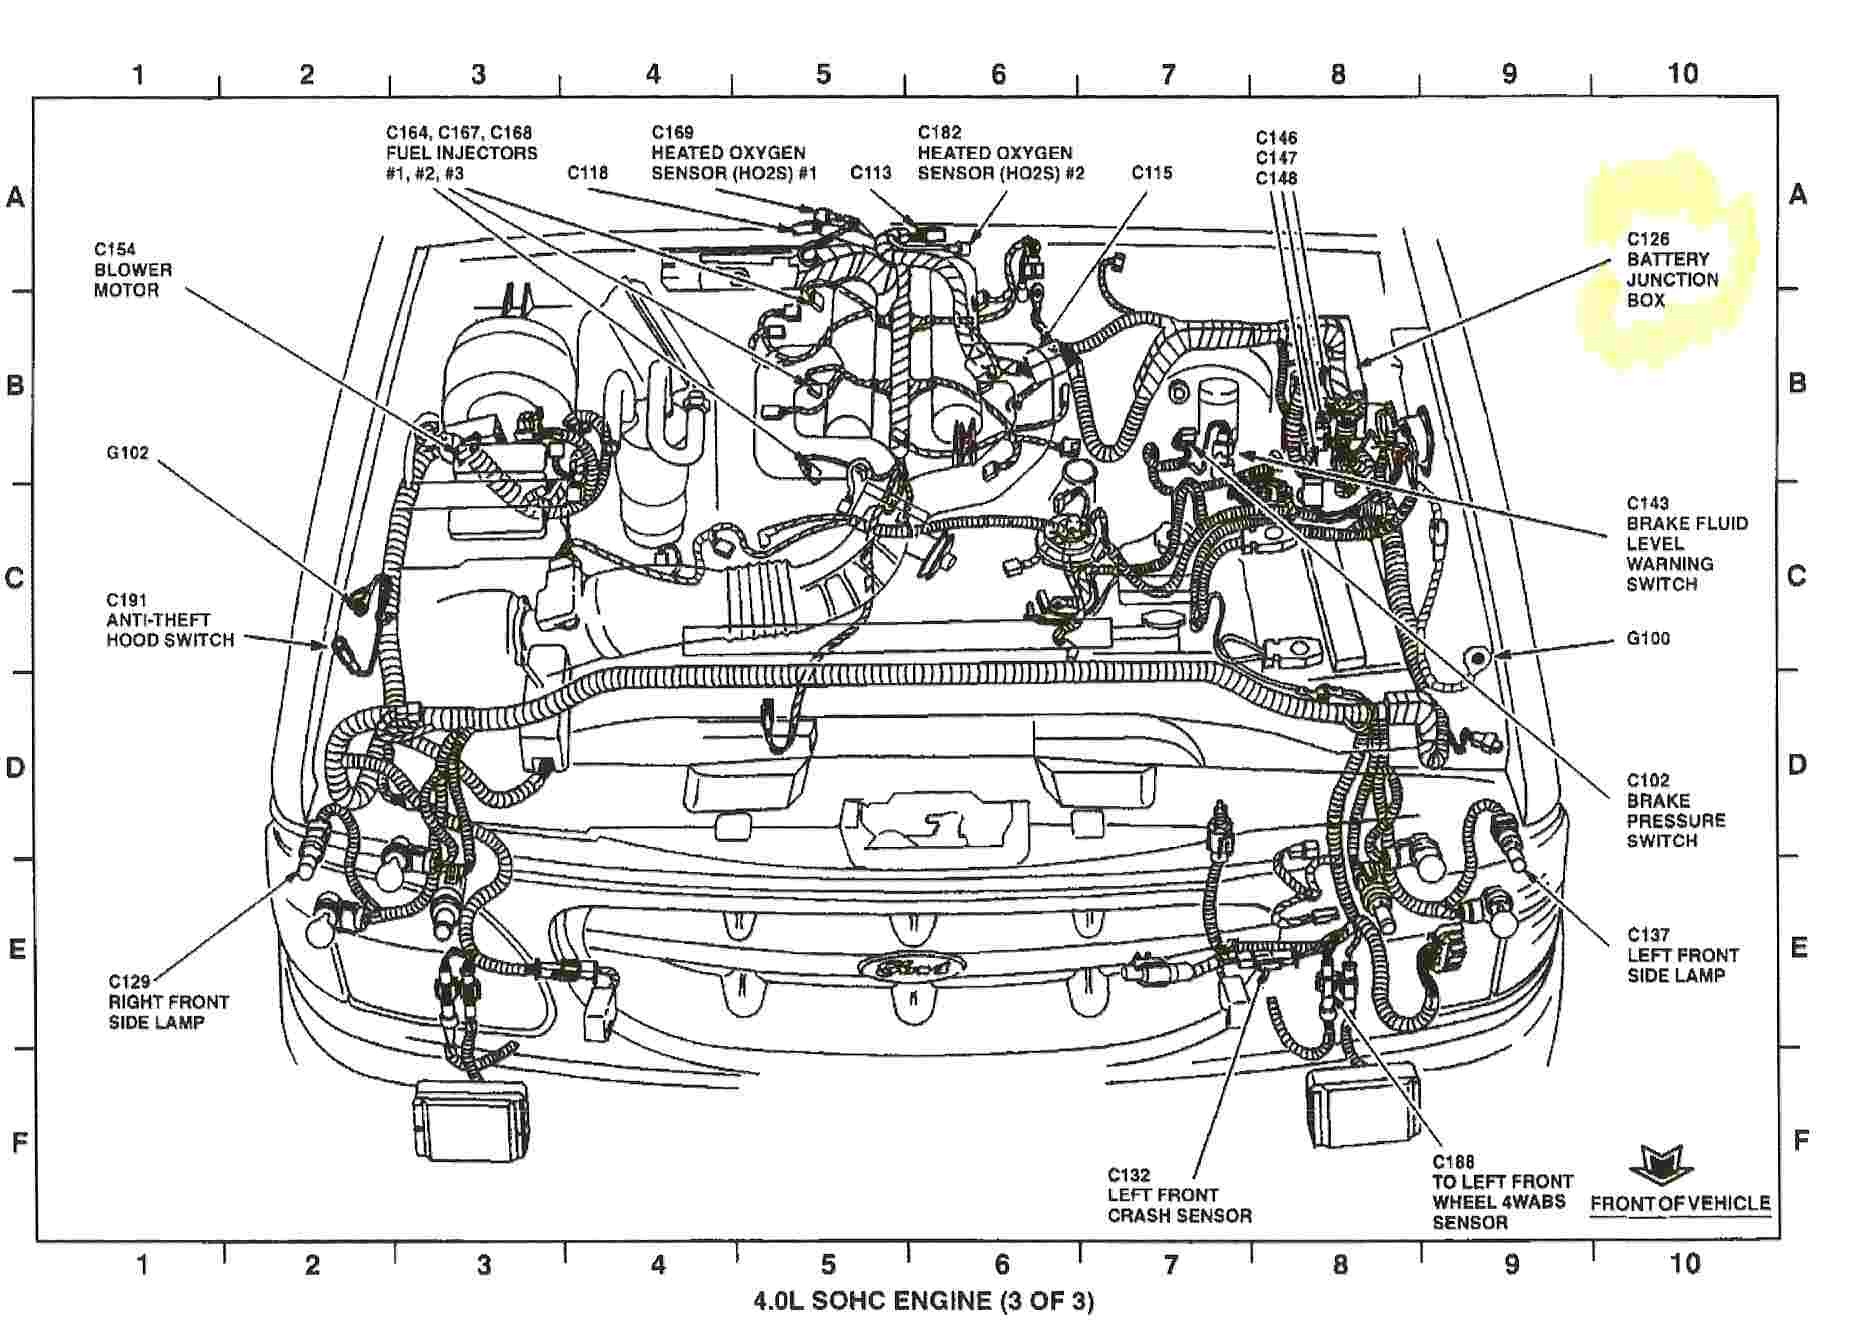 2001 ford Escape Engine Diagram Wrg 5047] 2002 ford Escape Engine Diagram Of 2001 ford Escape Engine Diagram